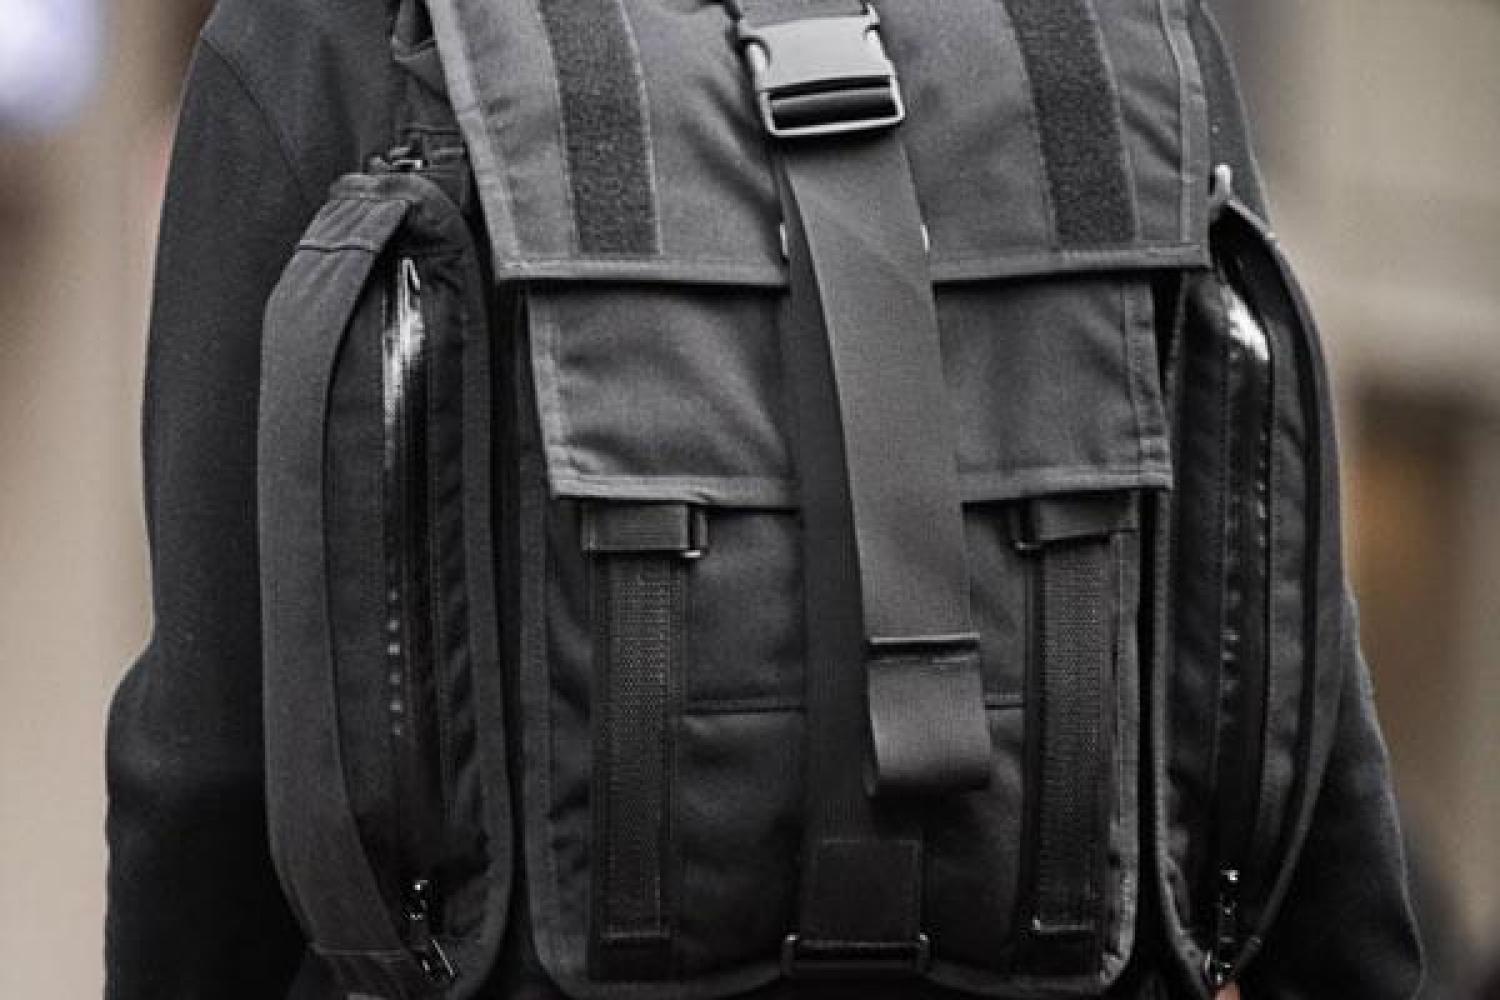 The 7 Best Laptop Bags in 2021 – Best Laptop Backpacks